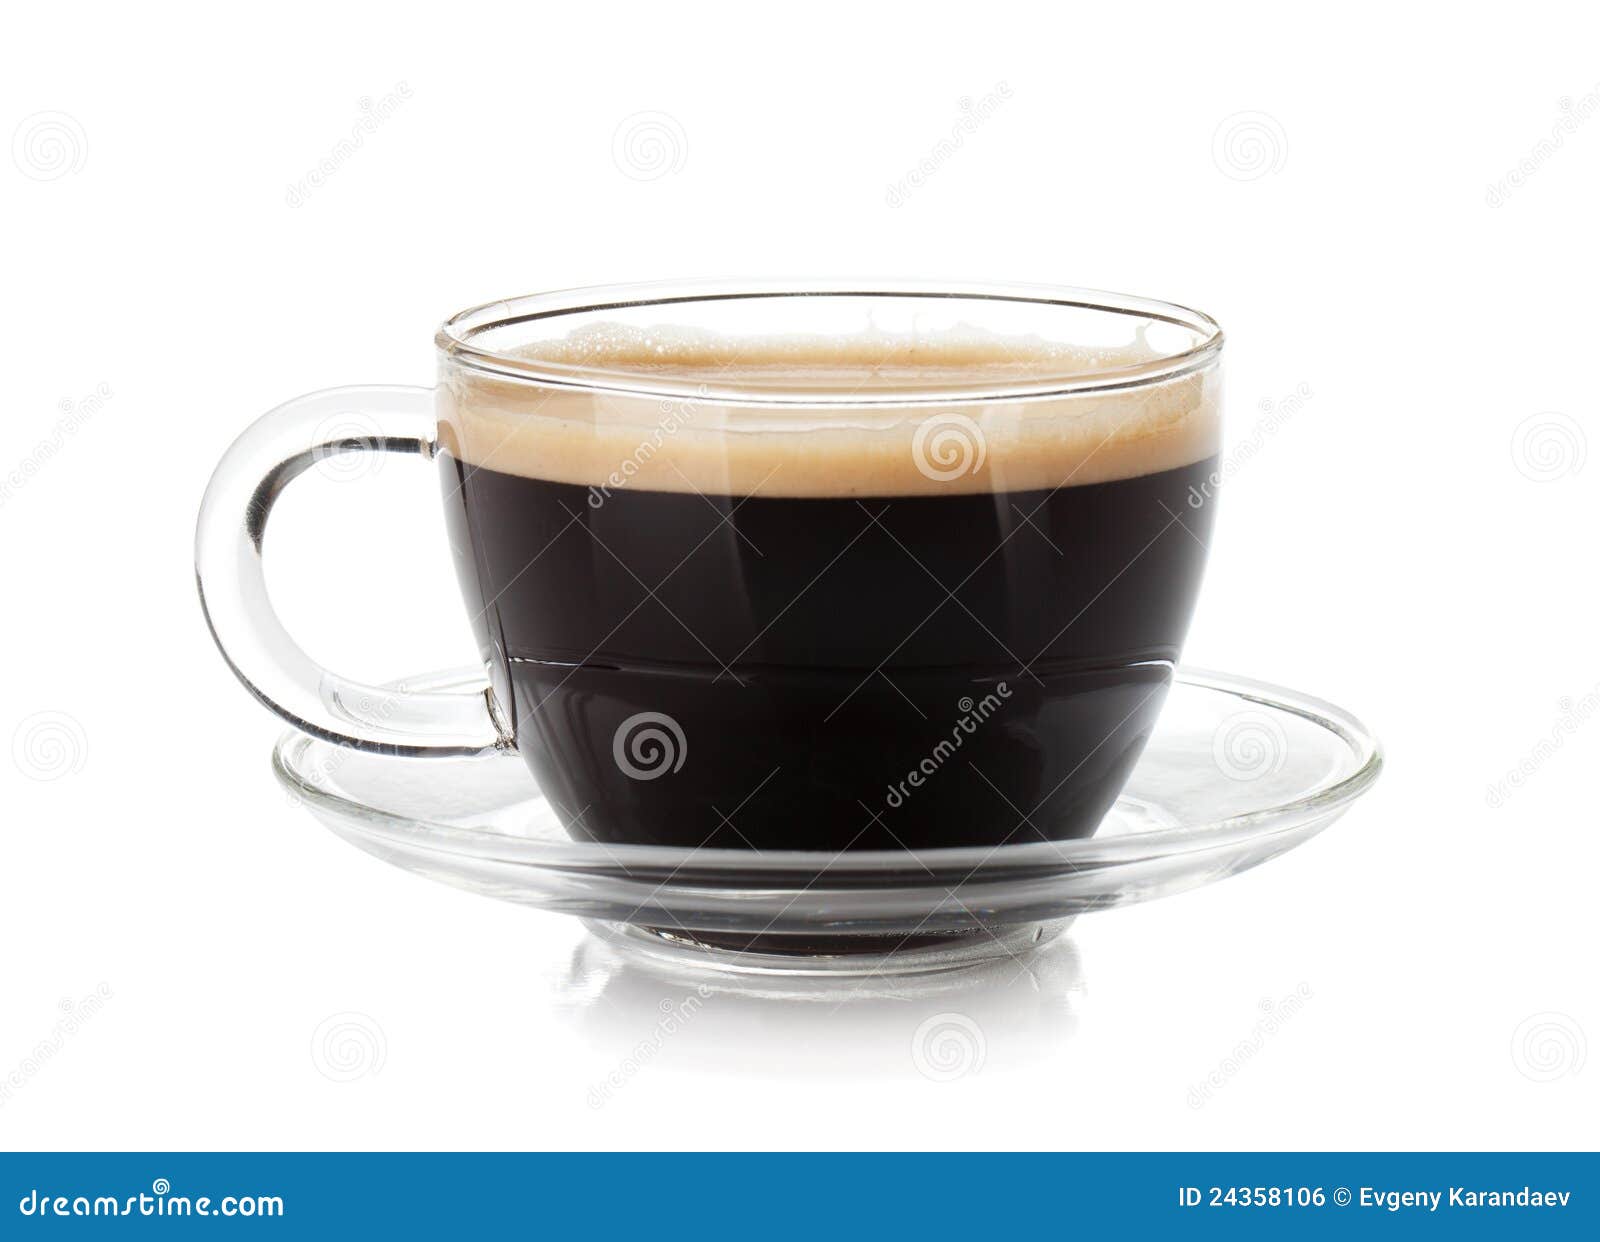 espresso coffee in glass cup